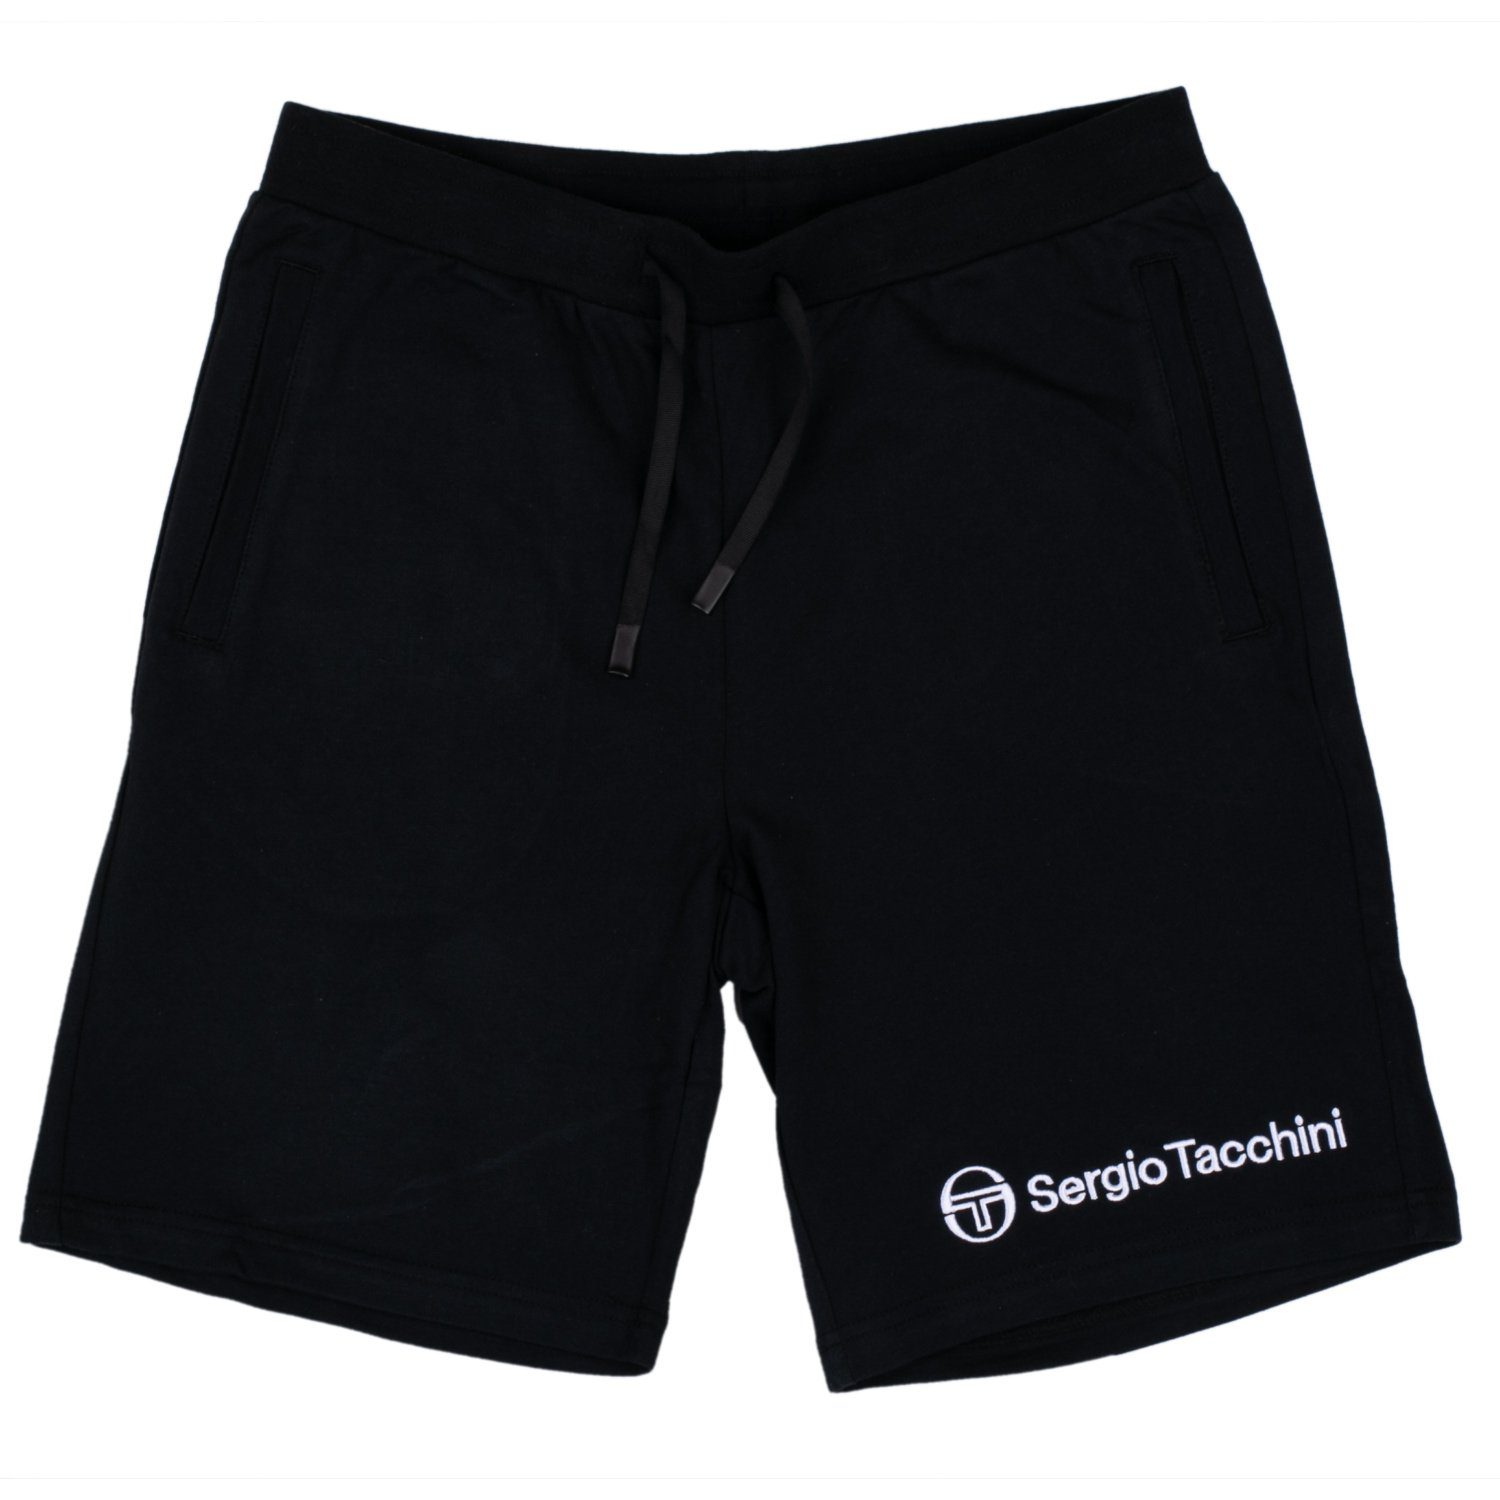 Sergio Tacchini Shorts Sergio Tacchini Herren Shorts Asis 021 black/white